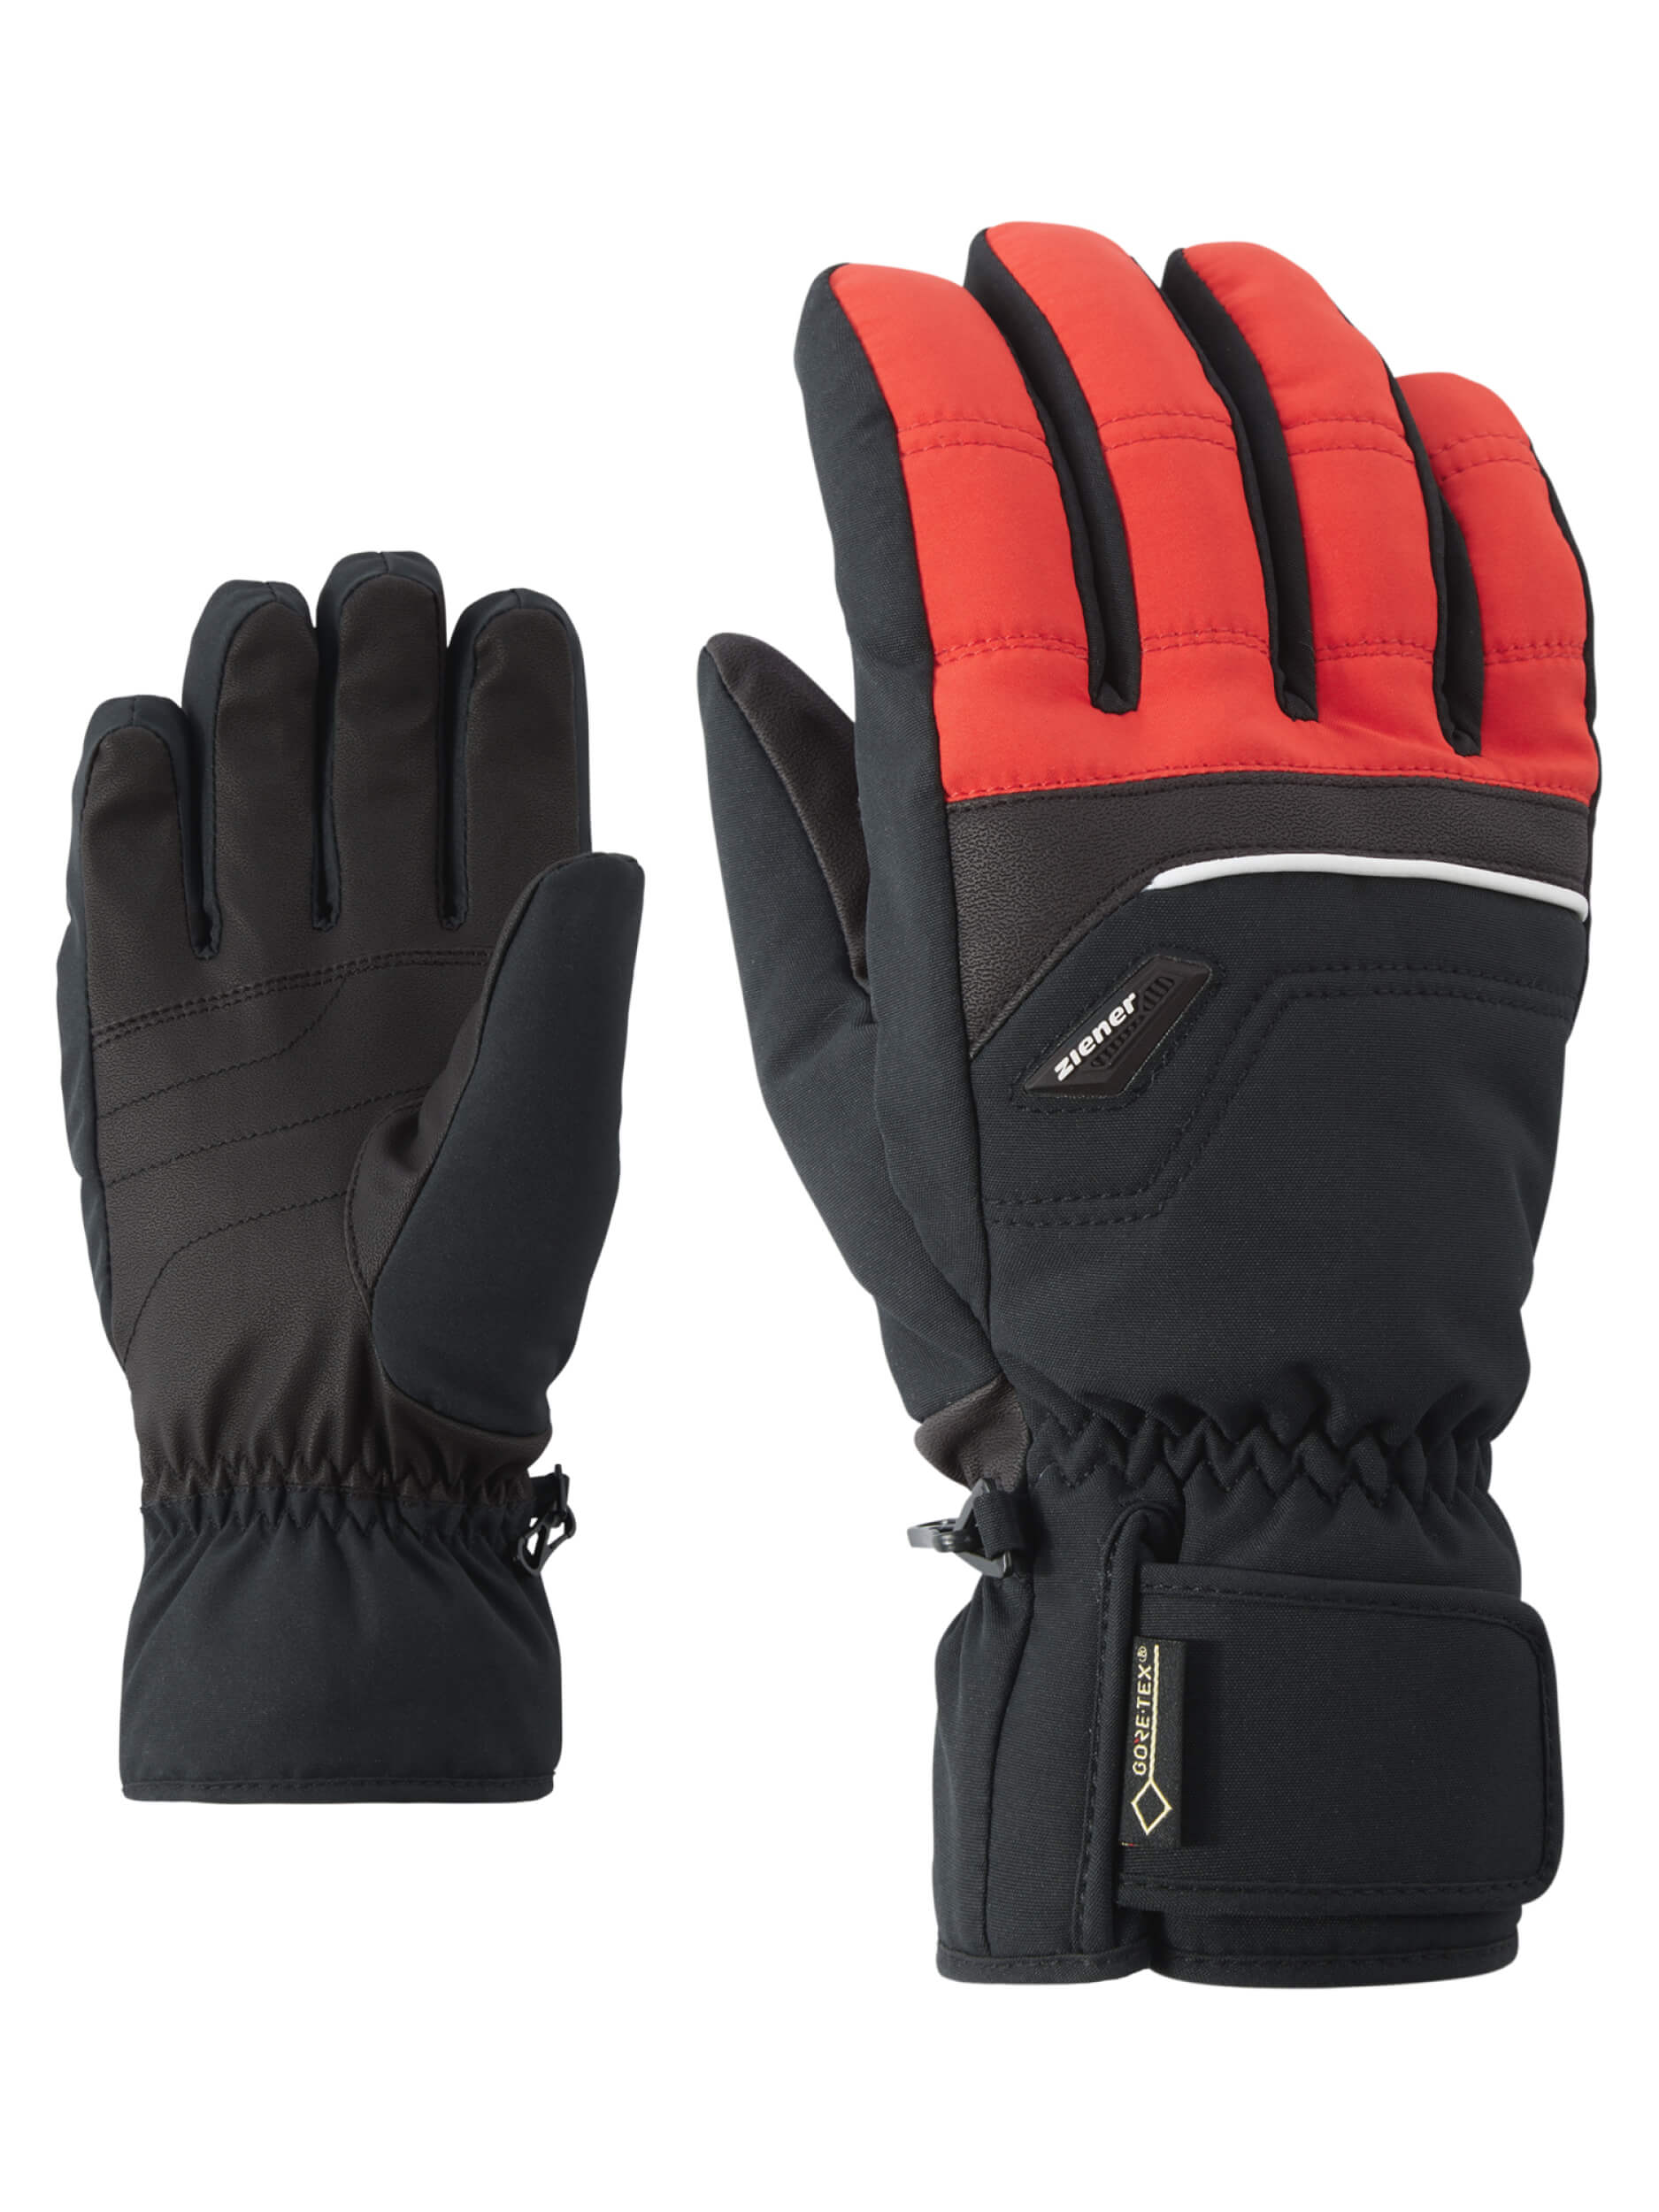 ZIENER Ski Handschuhe Glyn GORETEX rot schwarz 888